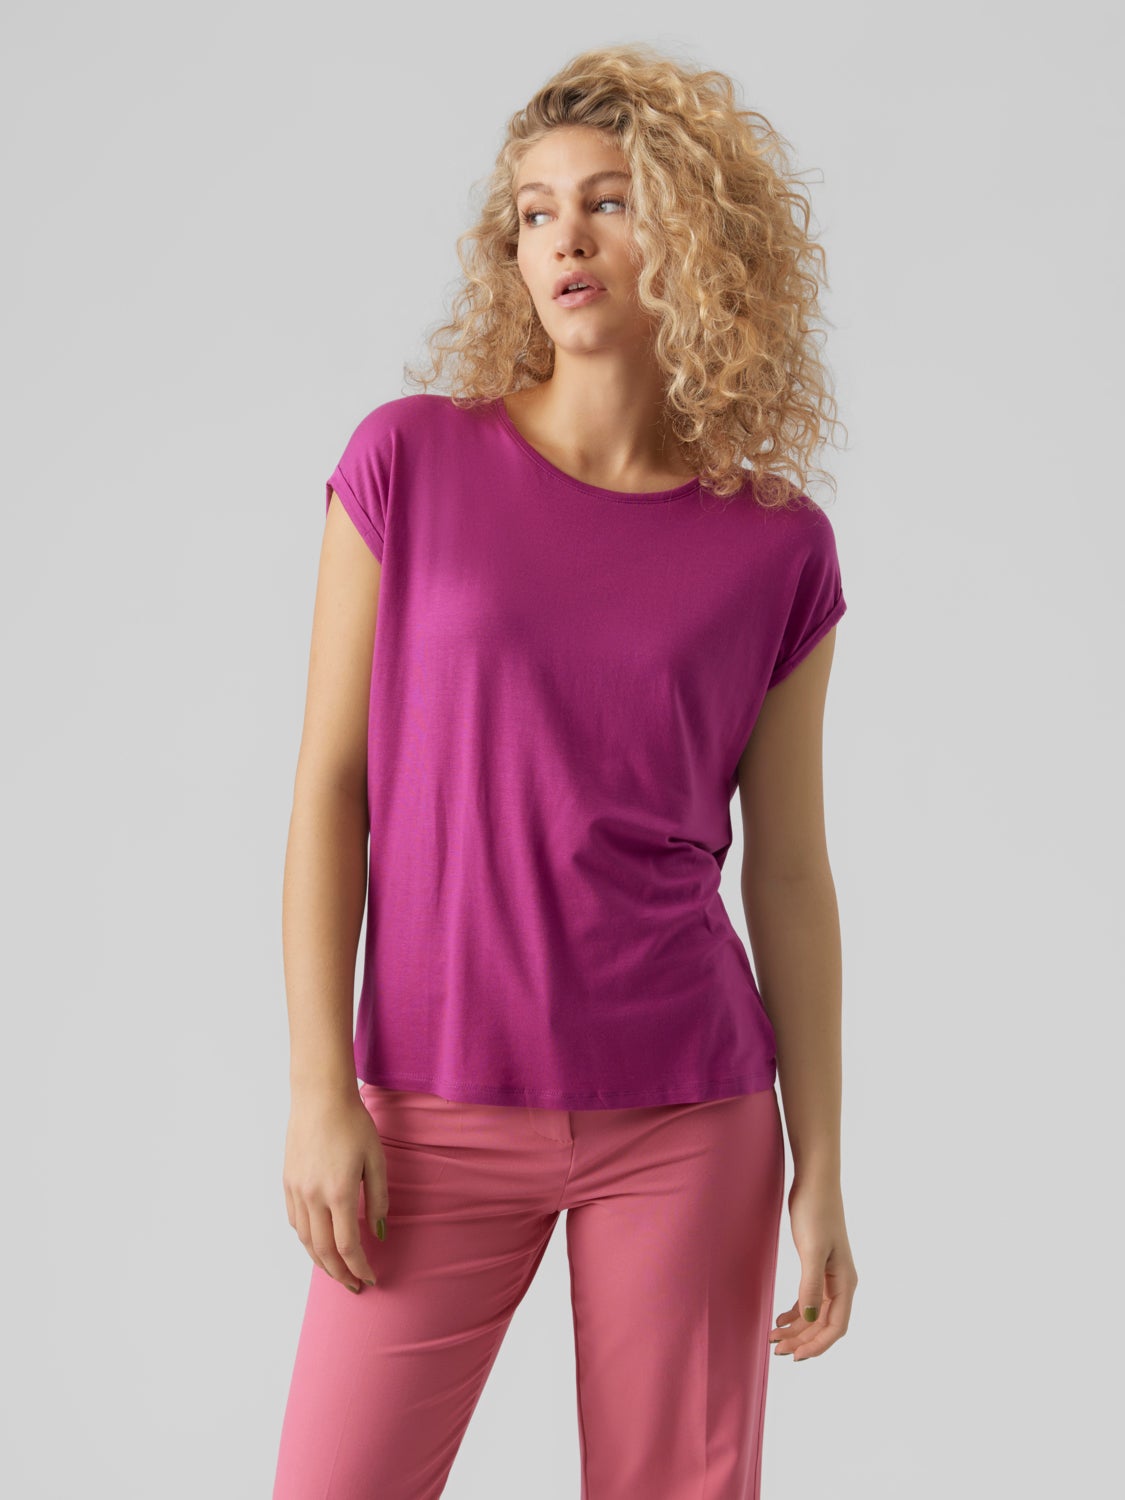 Vero Moda Bauchfreies Top Rosa S DAMEN Hemden & T-Shirts Lingerie Rabatt 56 % 